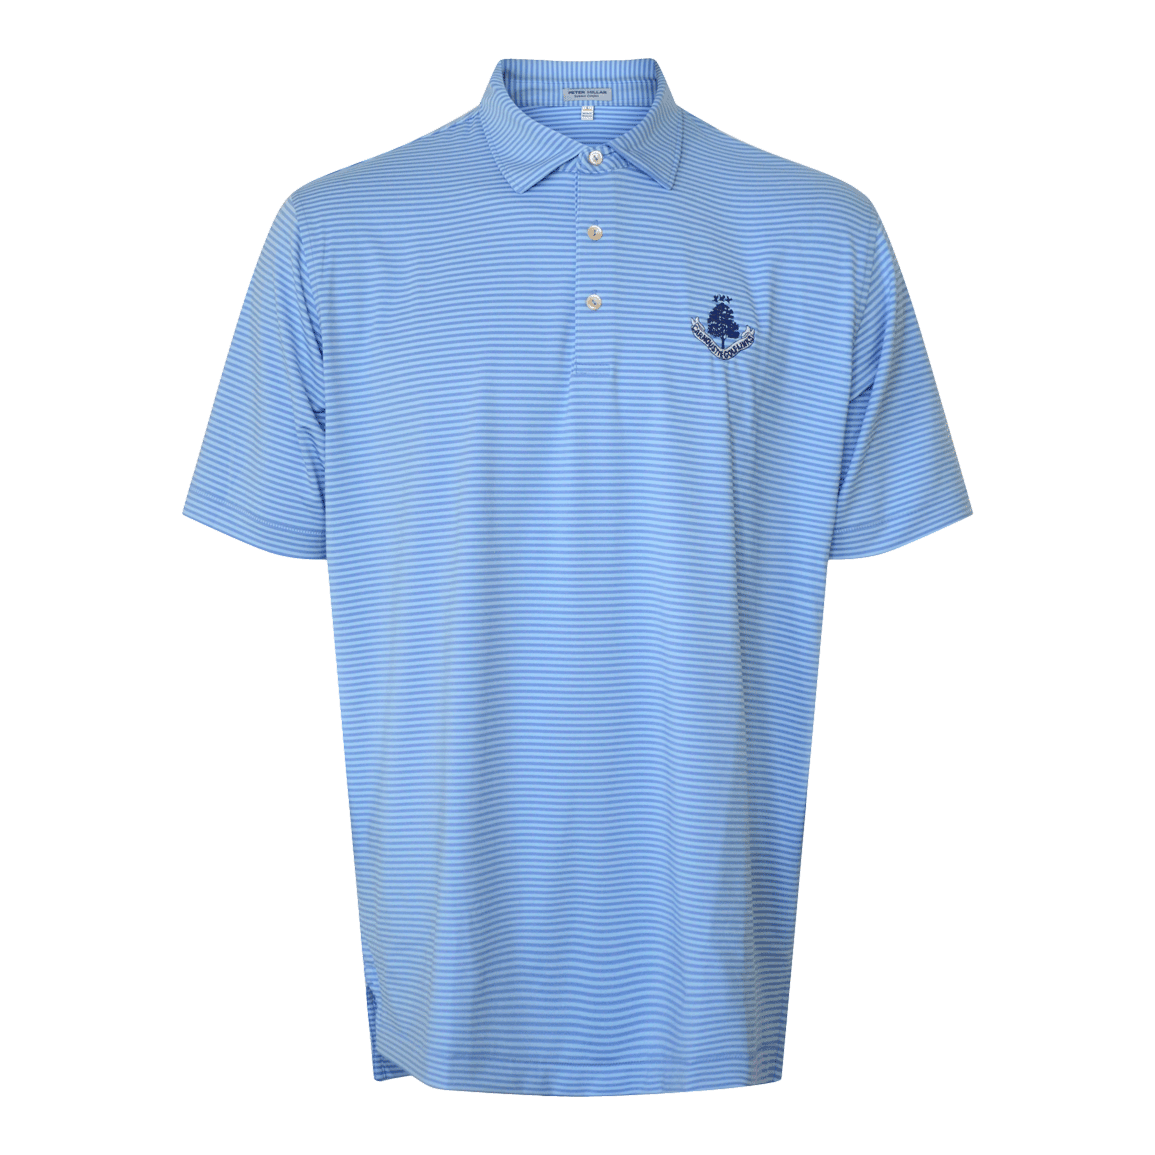 Hales Performance Polo Shirt - Maritime/Cottage Blue